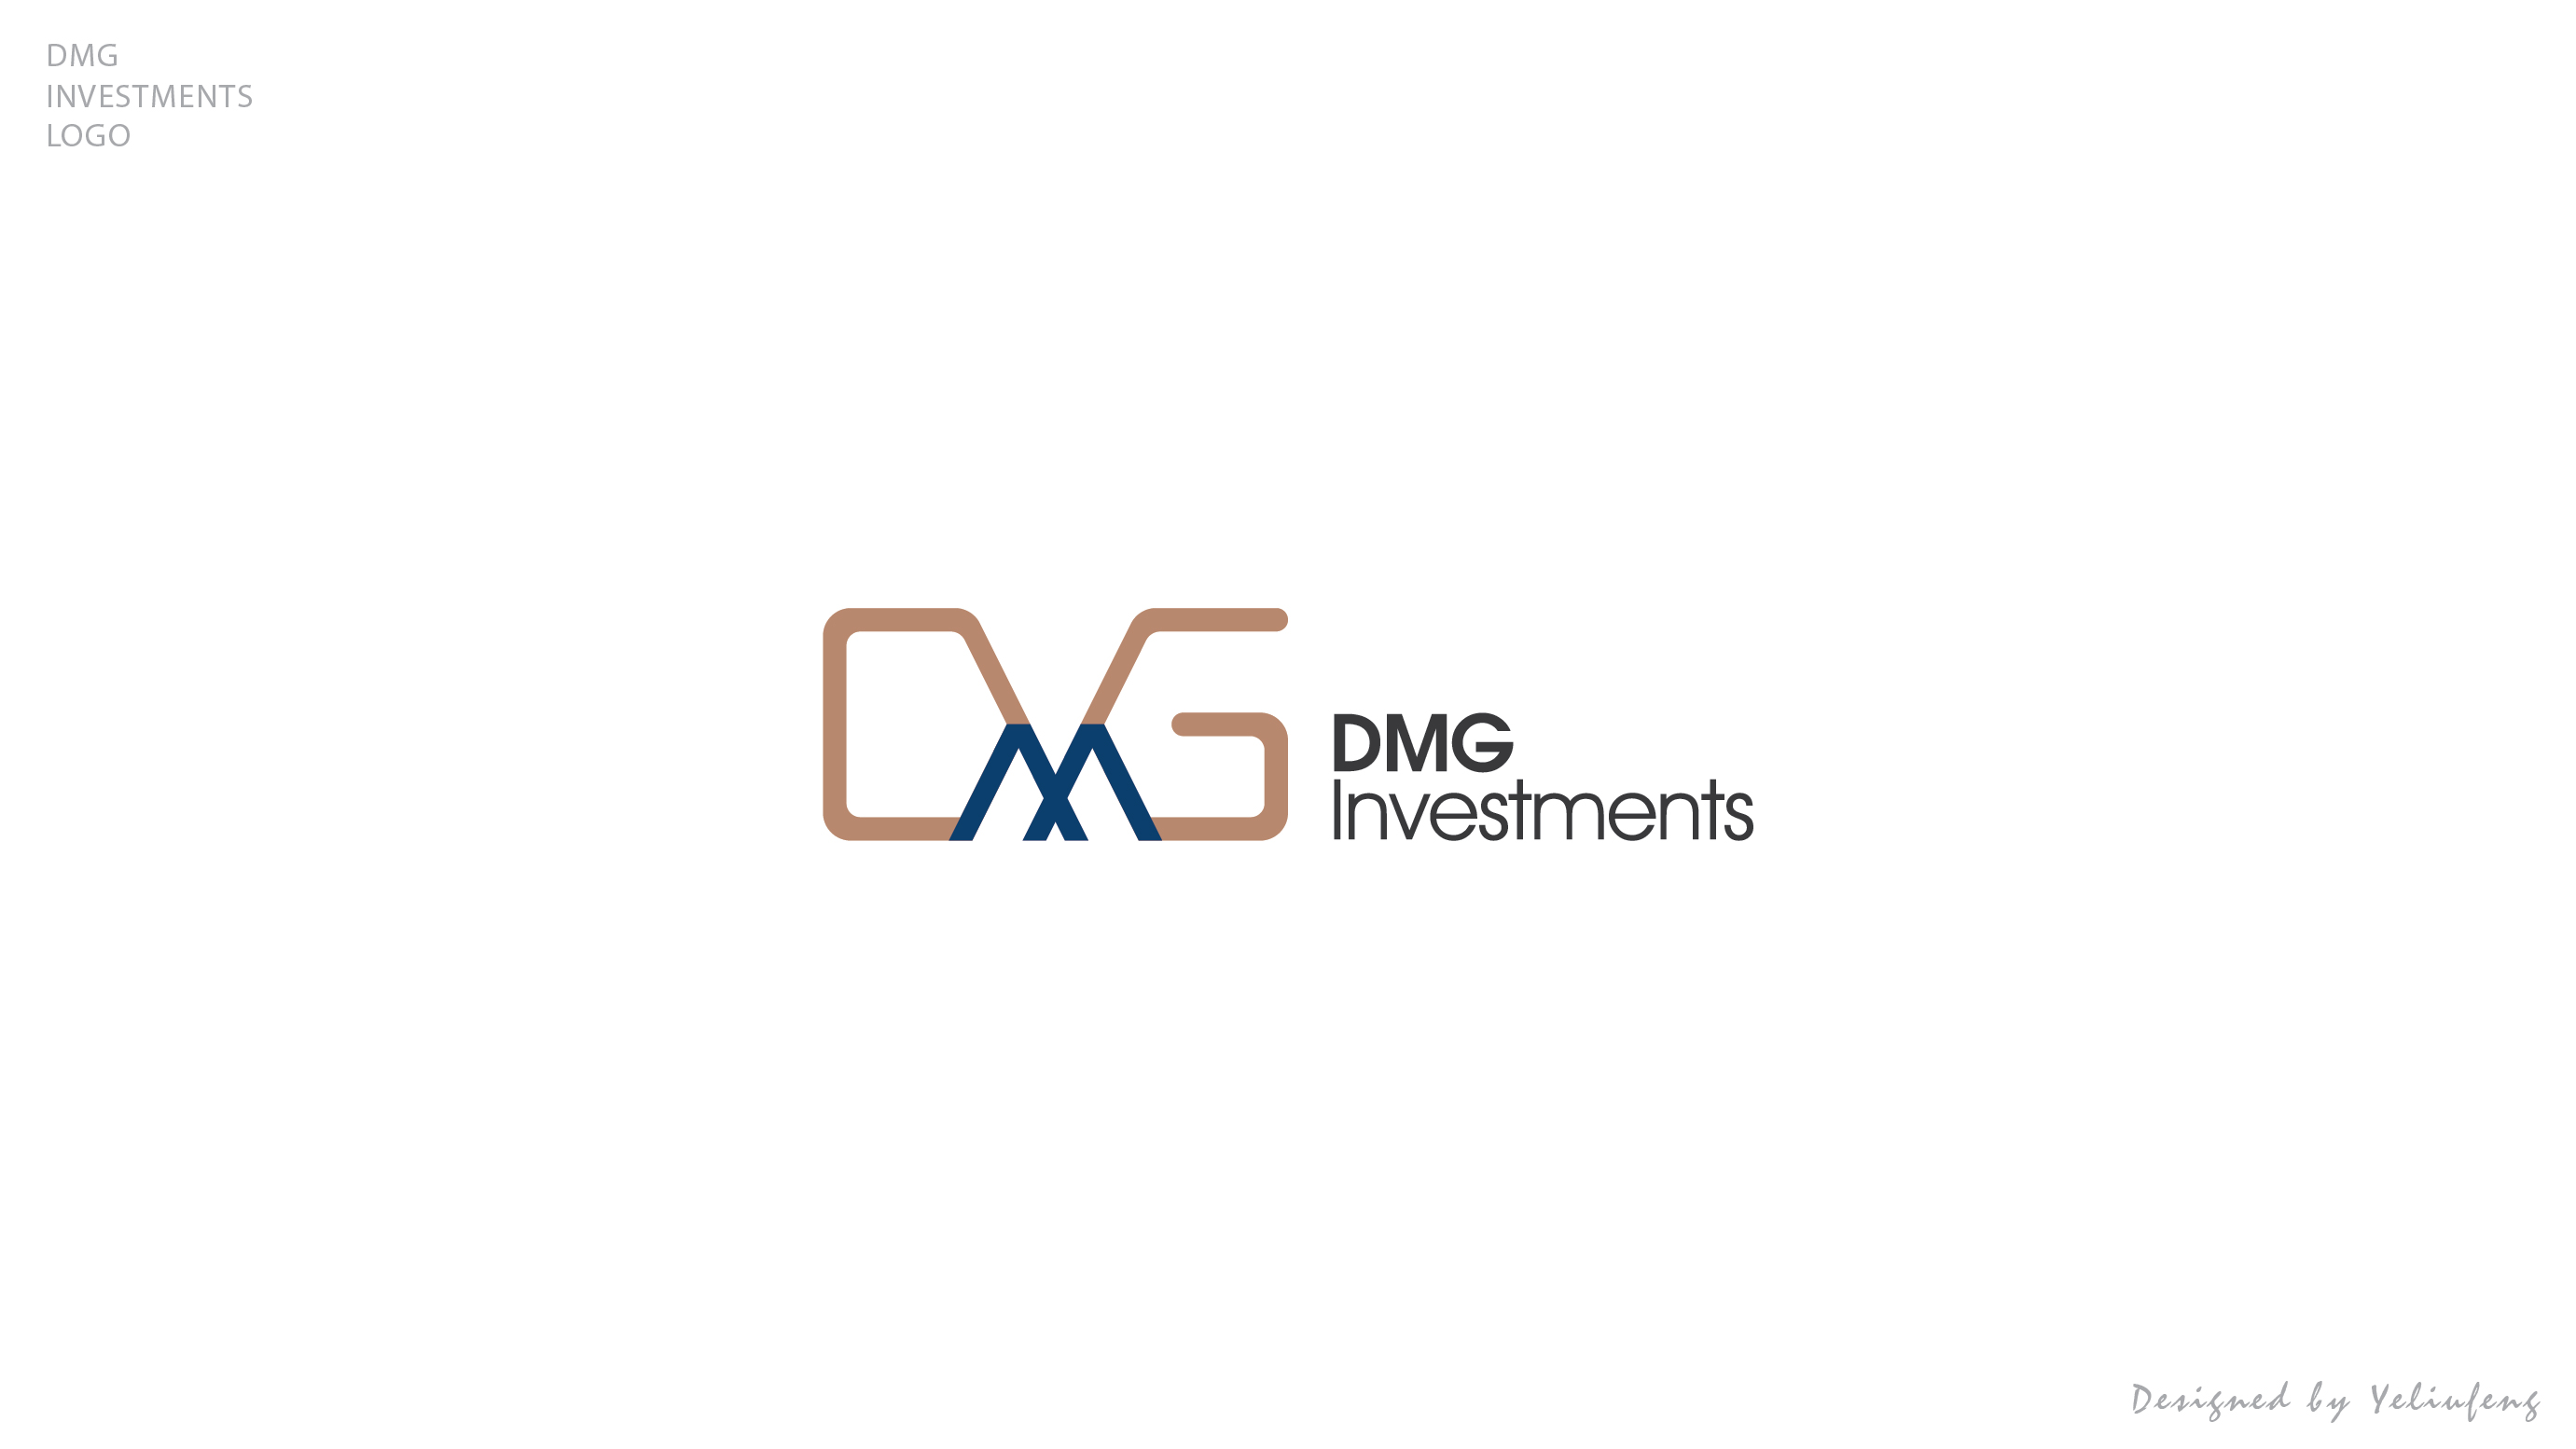 dmg investments